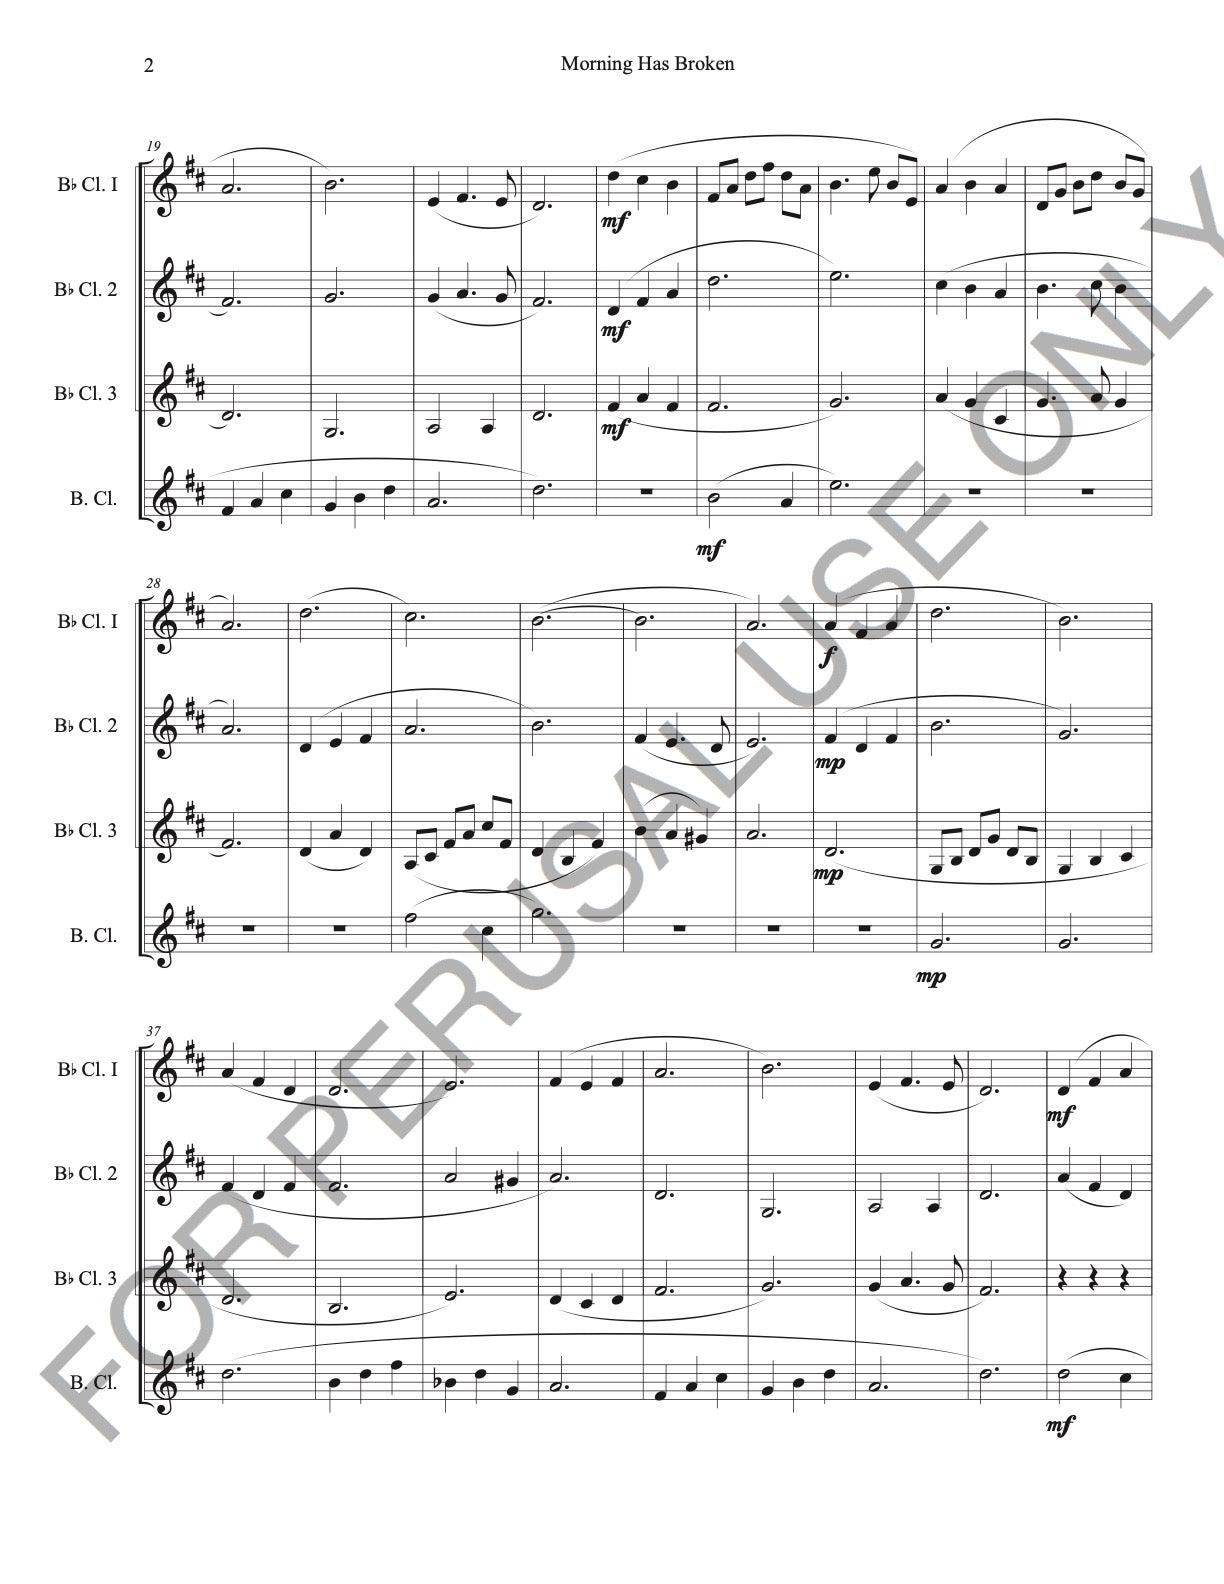 Morning has broken for Clarinet Quartet (4th Clarinet Optional) - ChaipruckMekara